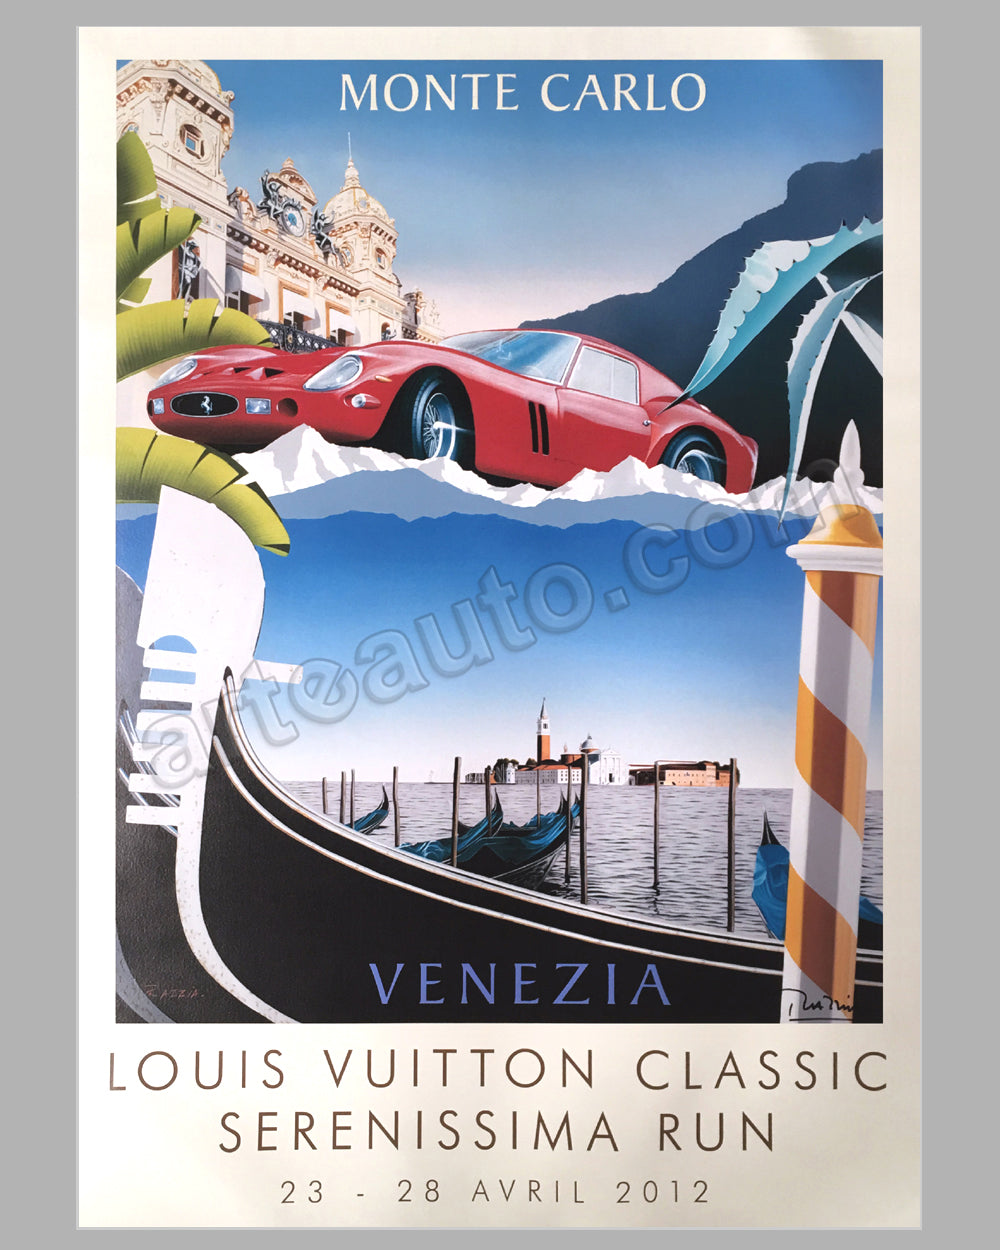 Louis Vuitton Classic Serenissima Run large original poster by Razzia